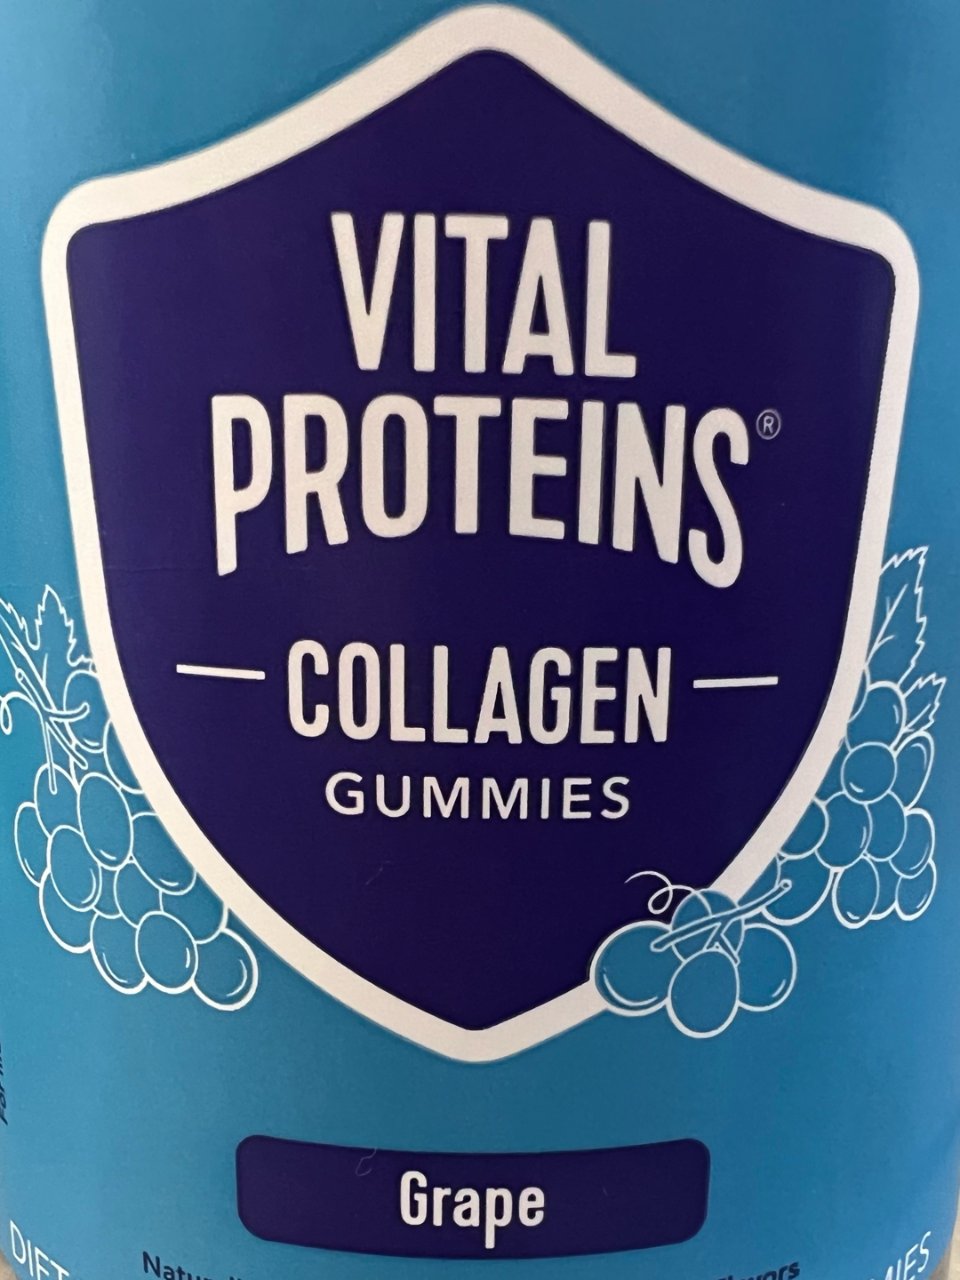 Vital Proteins胶原蛋白软糖...